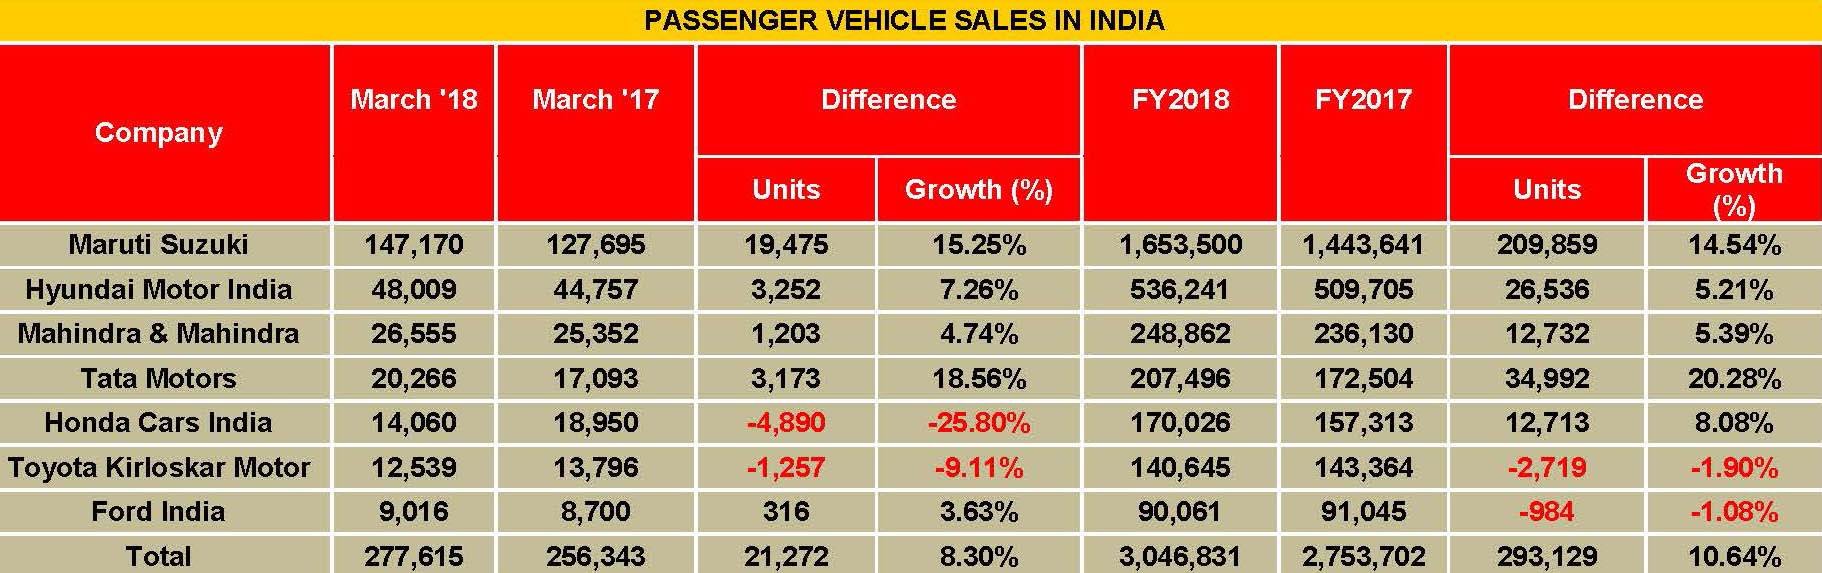 passenger-vehicle-sales-in-india